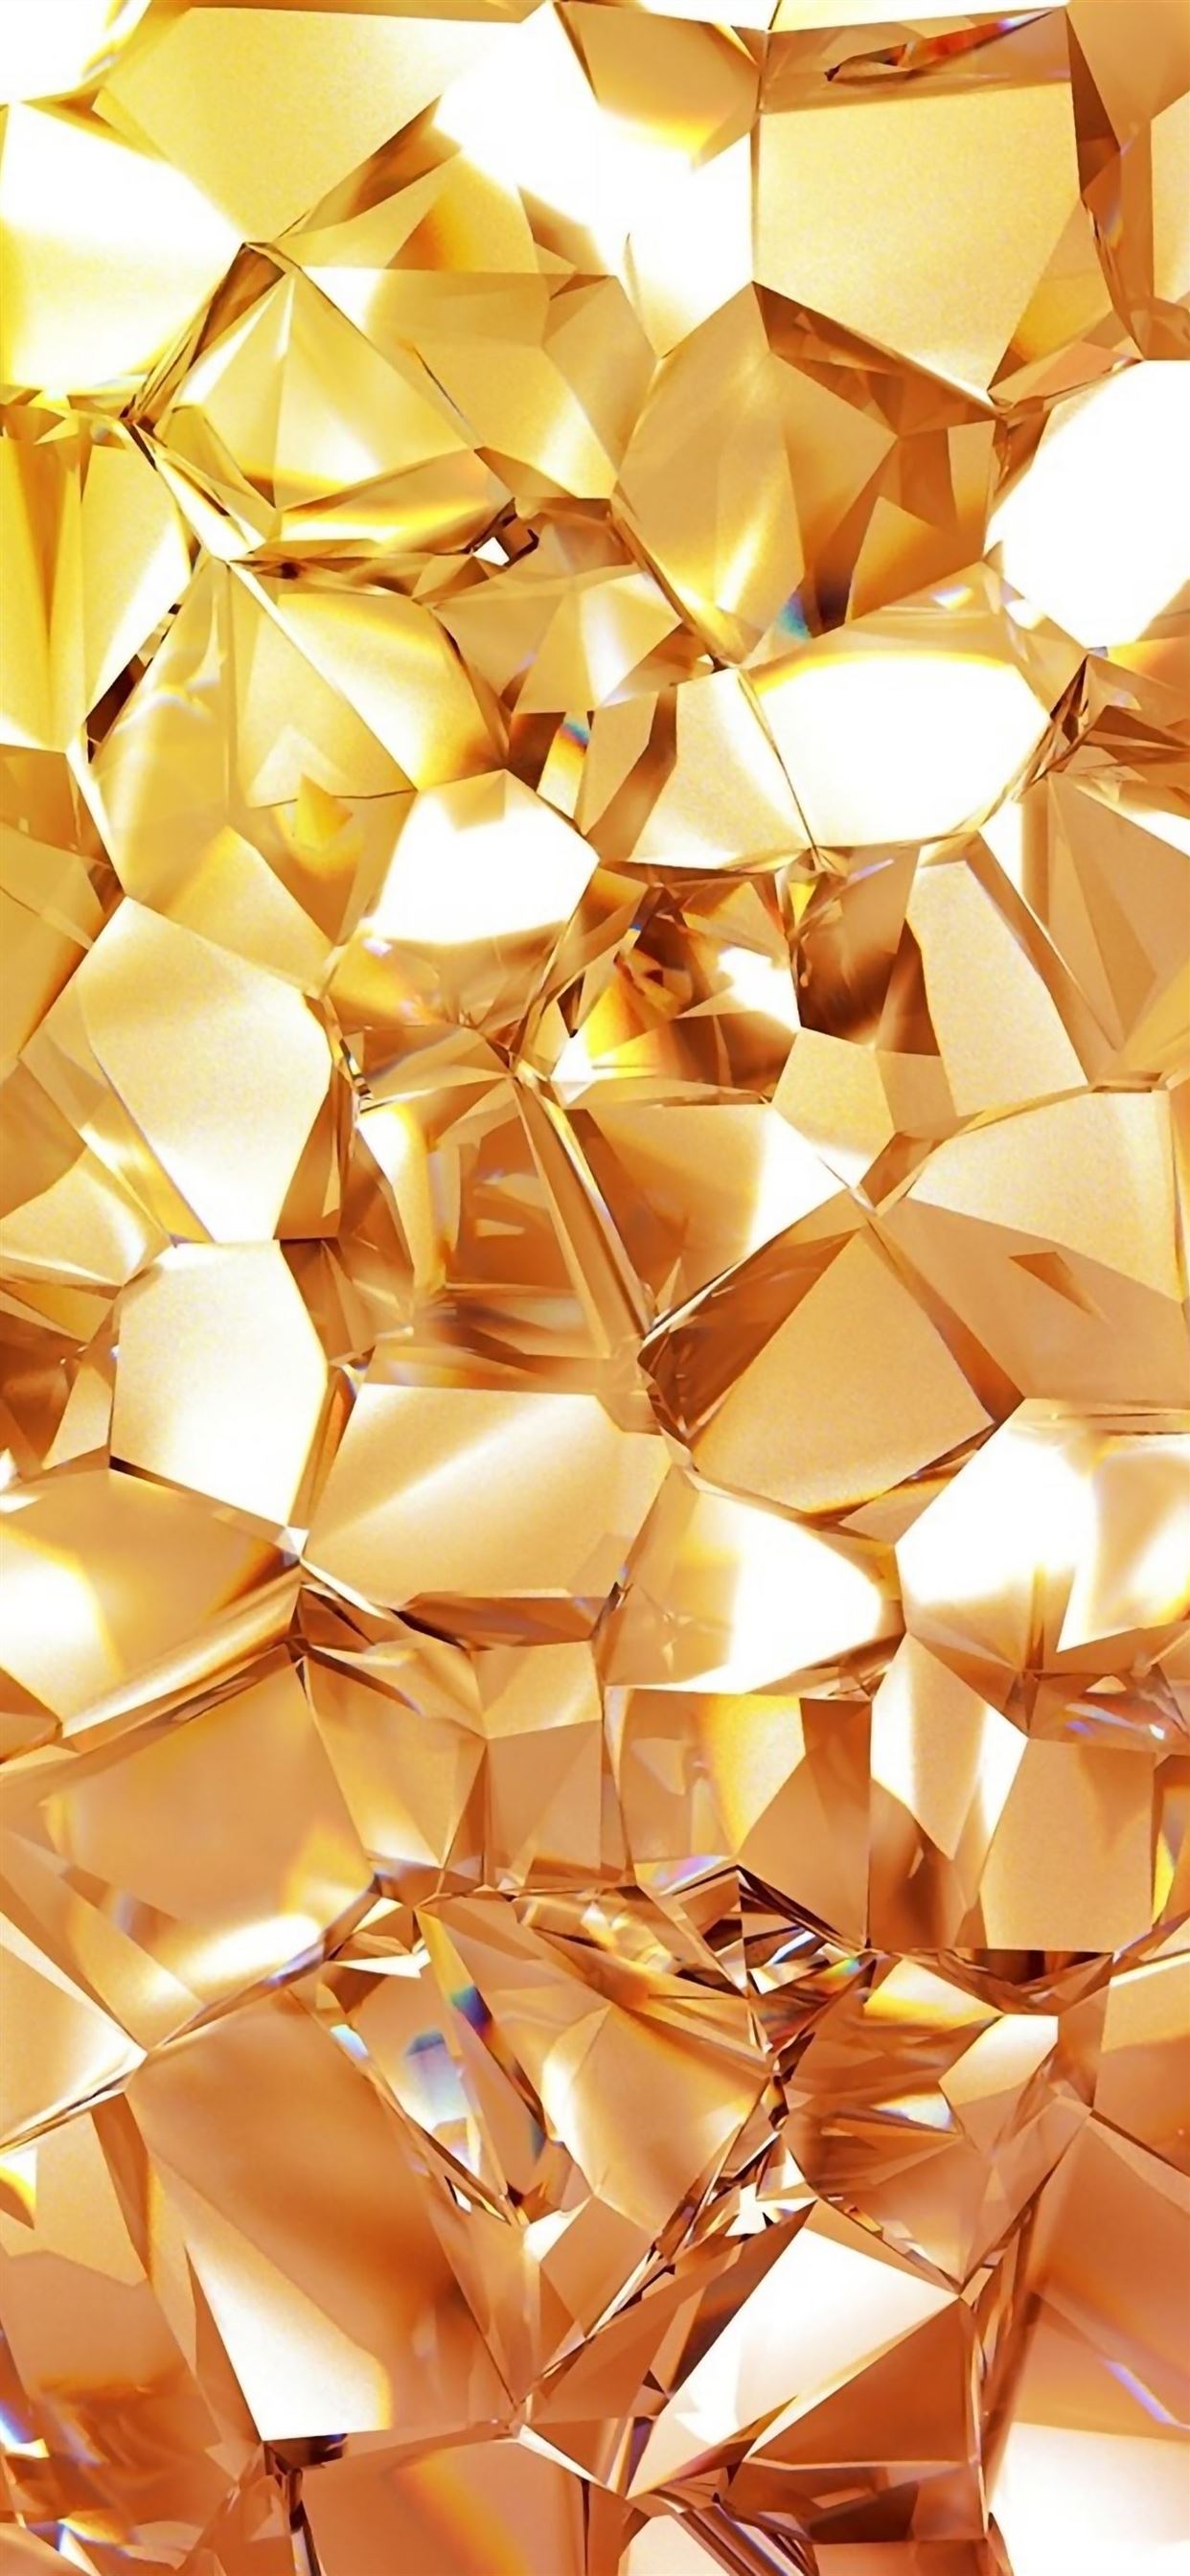 Geometric Gold Diamond iPhone Wallpaper Free Download